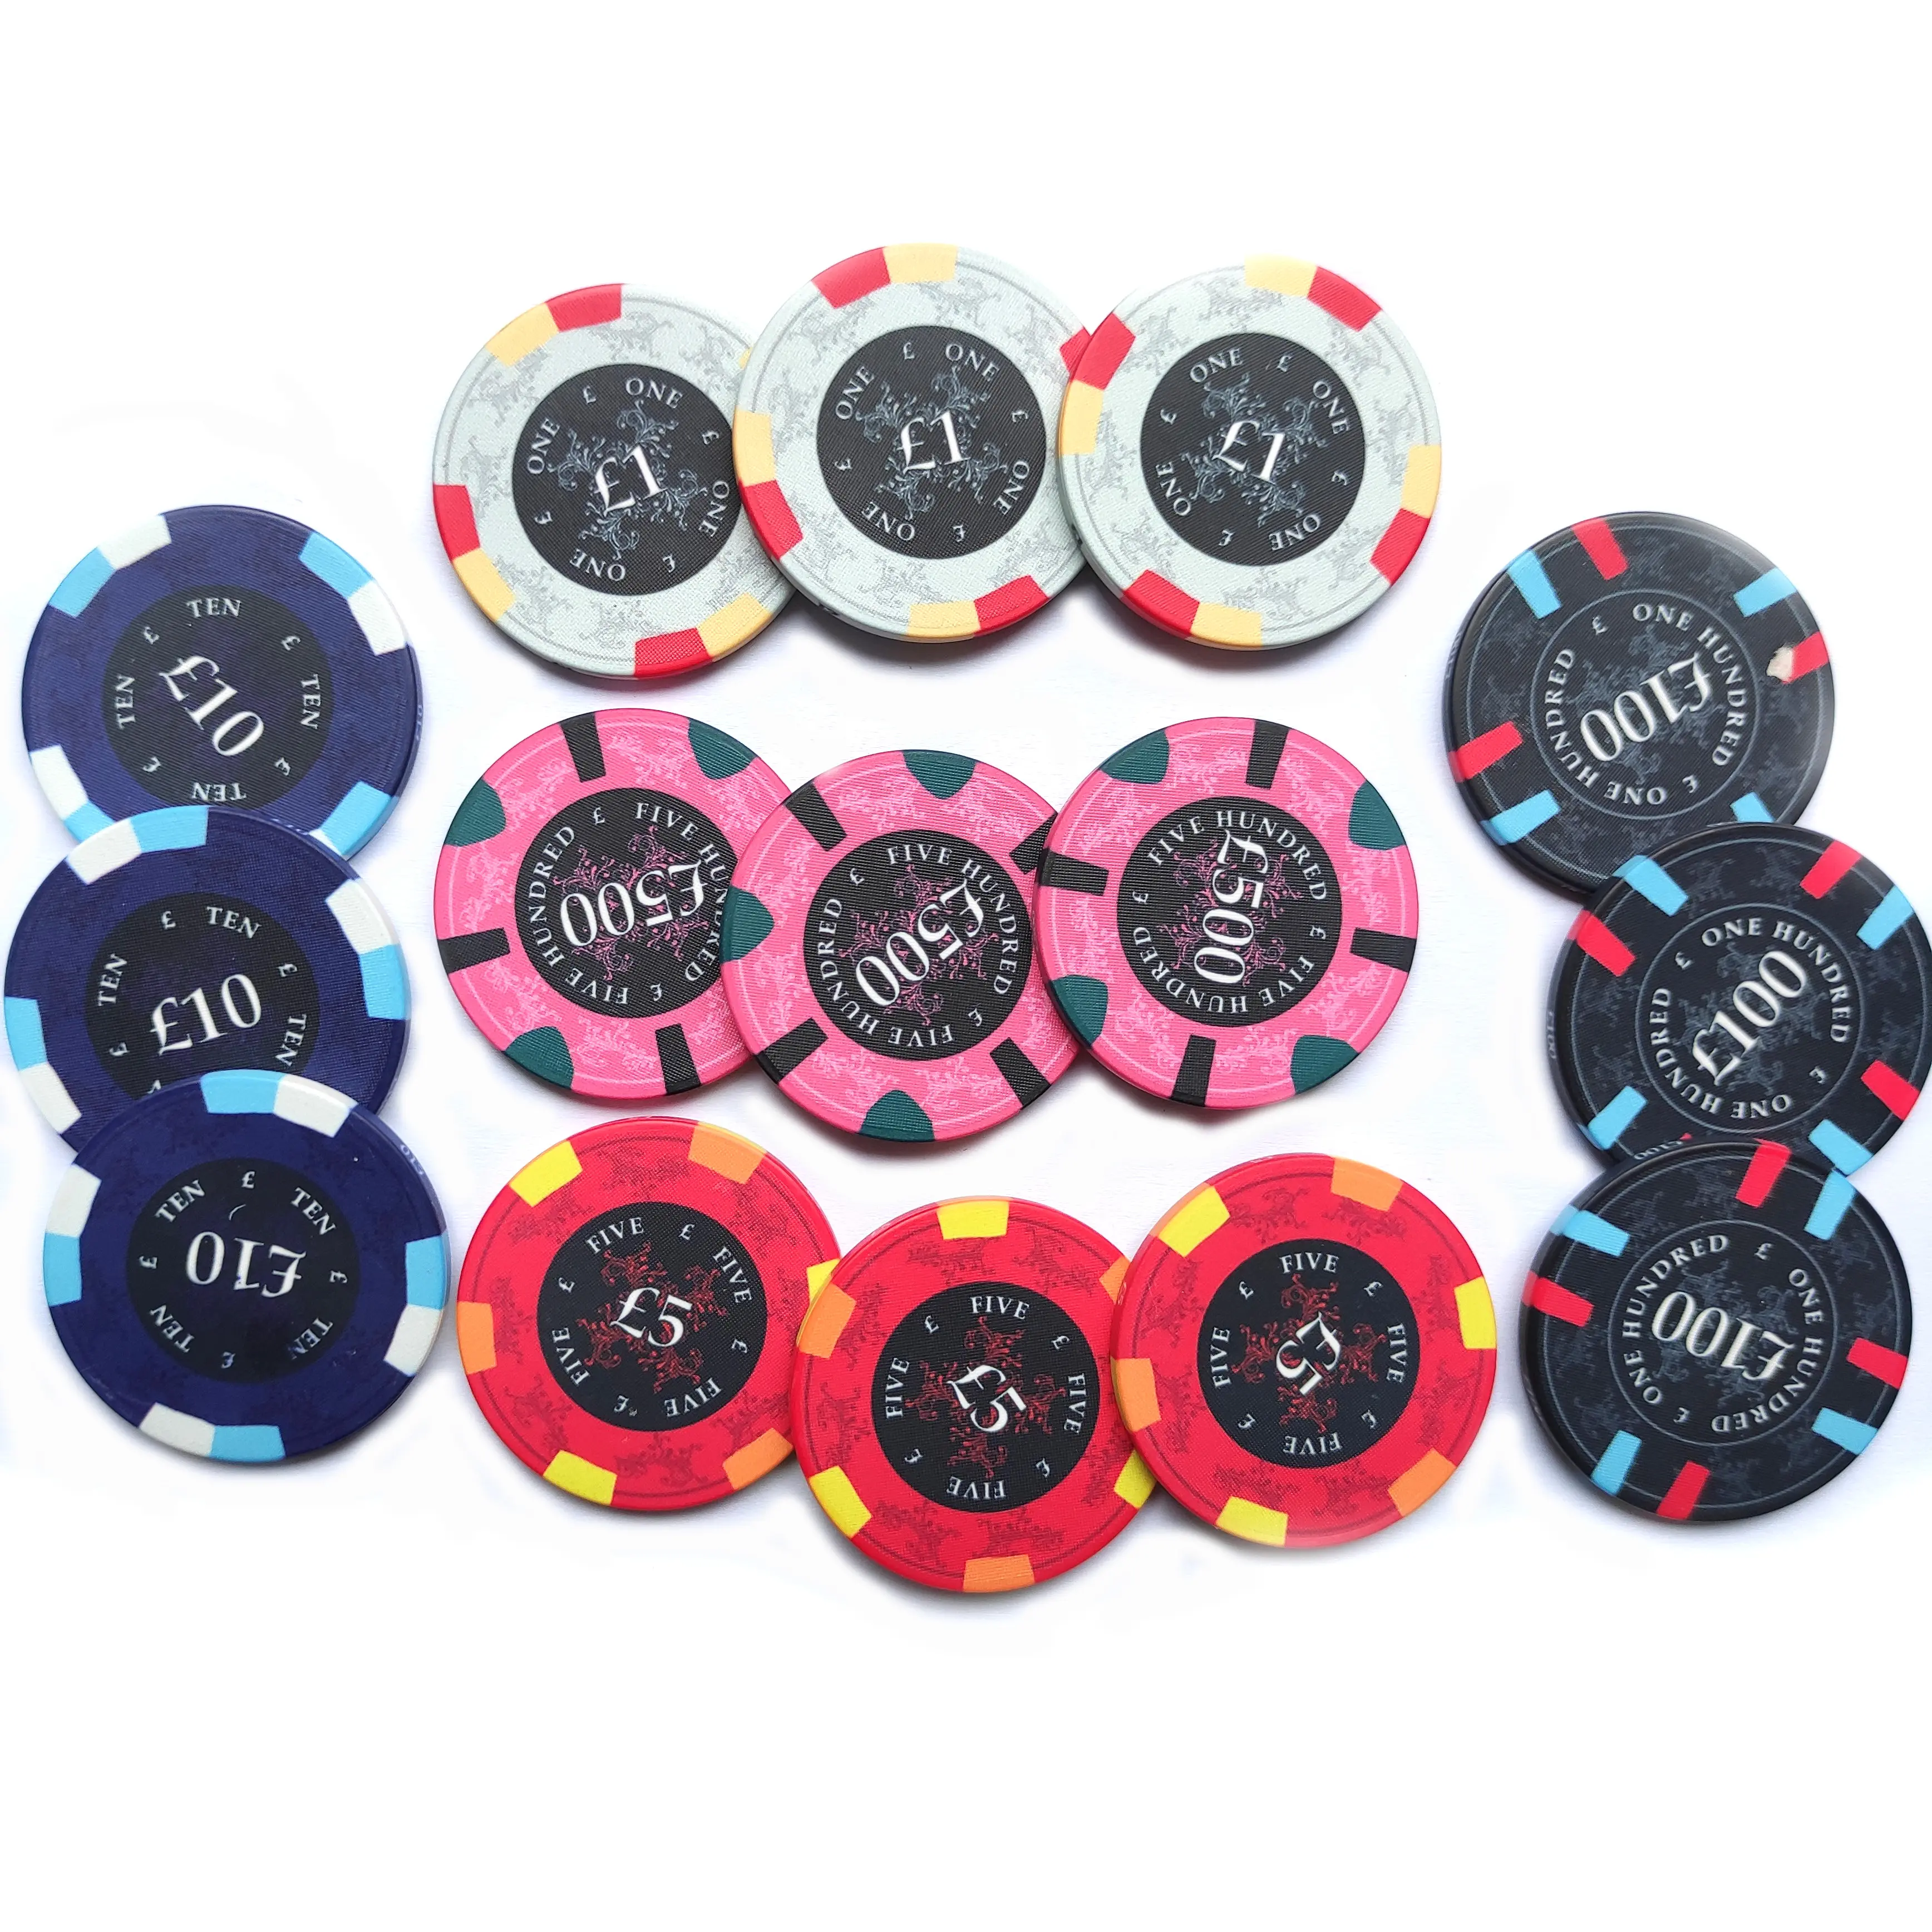 Angepasst china glück drachen 39mm 10G keramik ton poker chips für casino